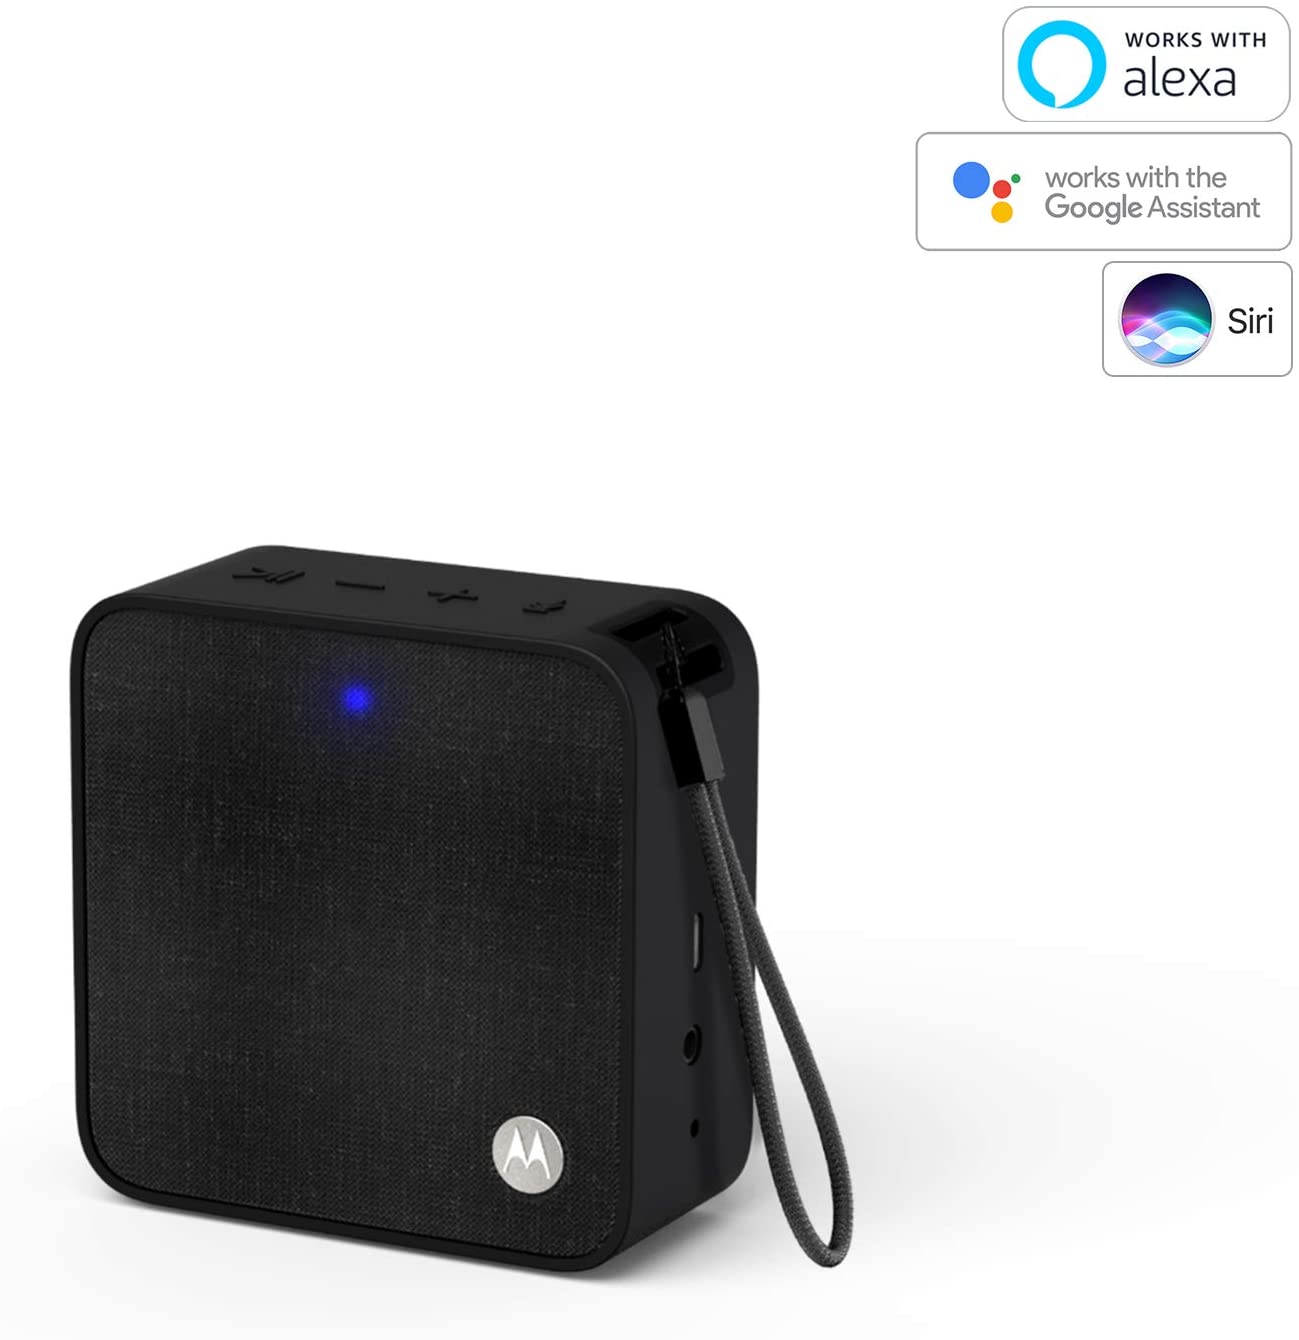 Motorola Sonic Boost 210 Smart Portable Wireless Bluetooth Speaker and Voice Command Compatible with Amazon Alexa, Siri & Google Assistant – Black